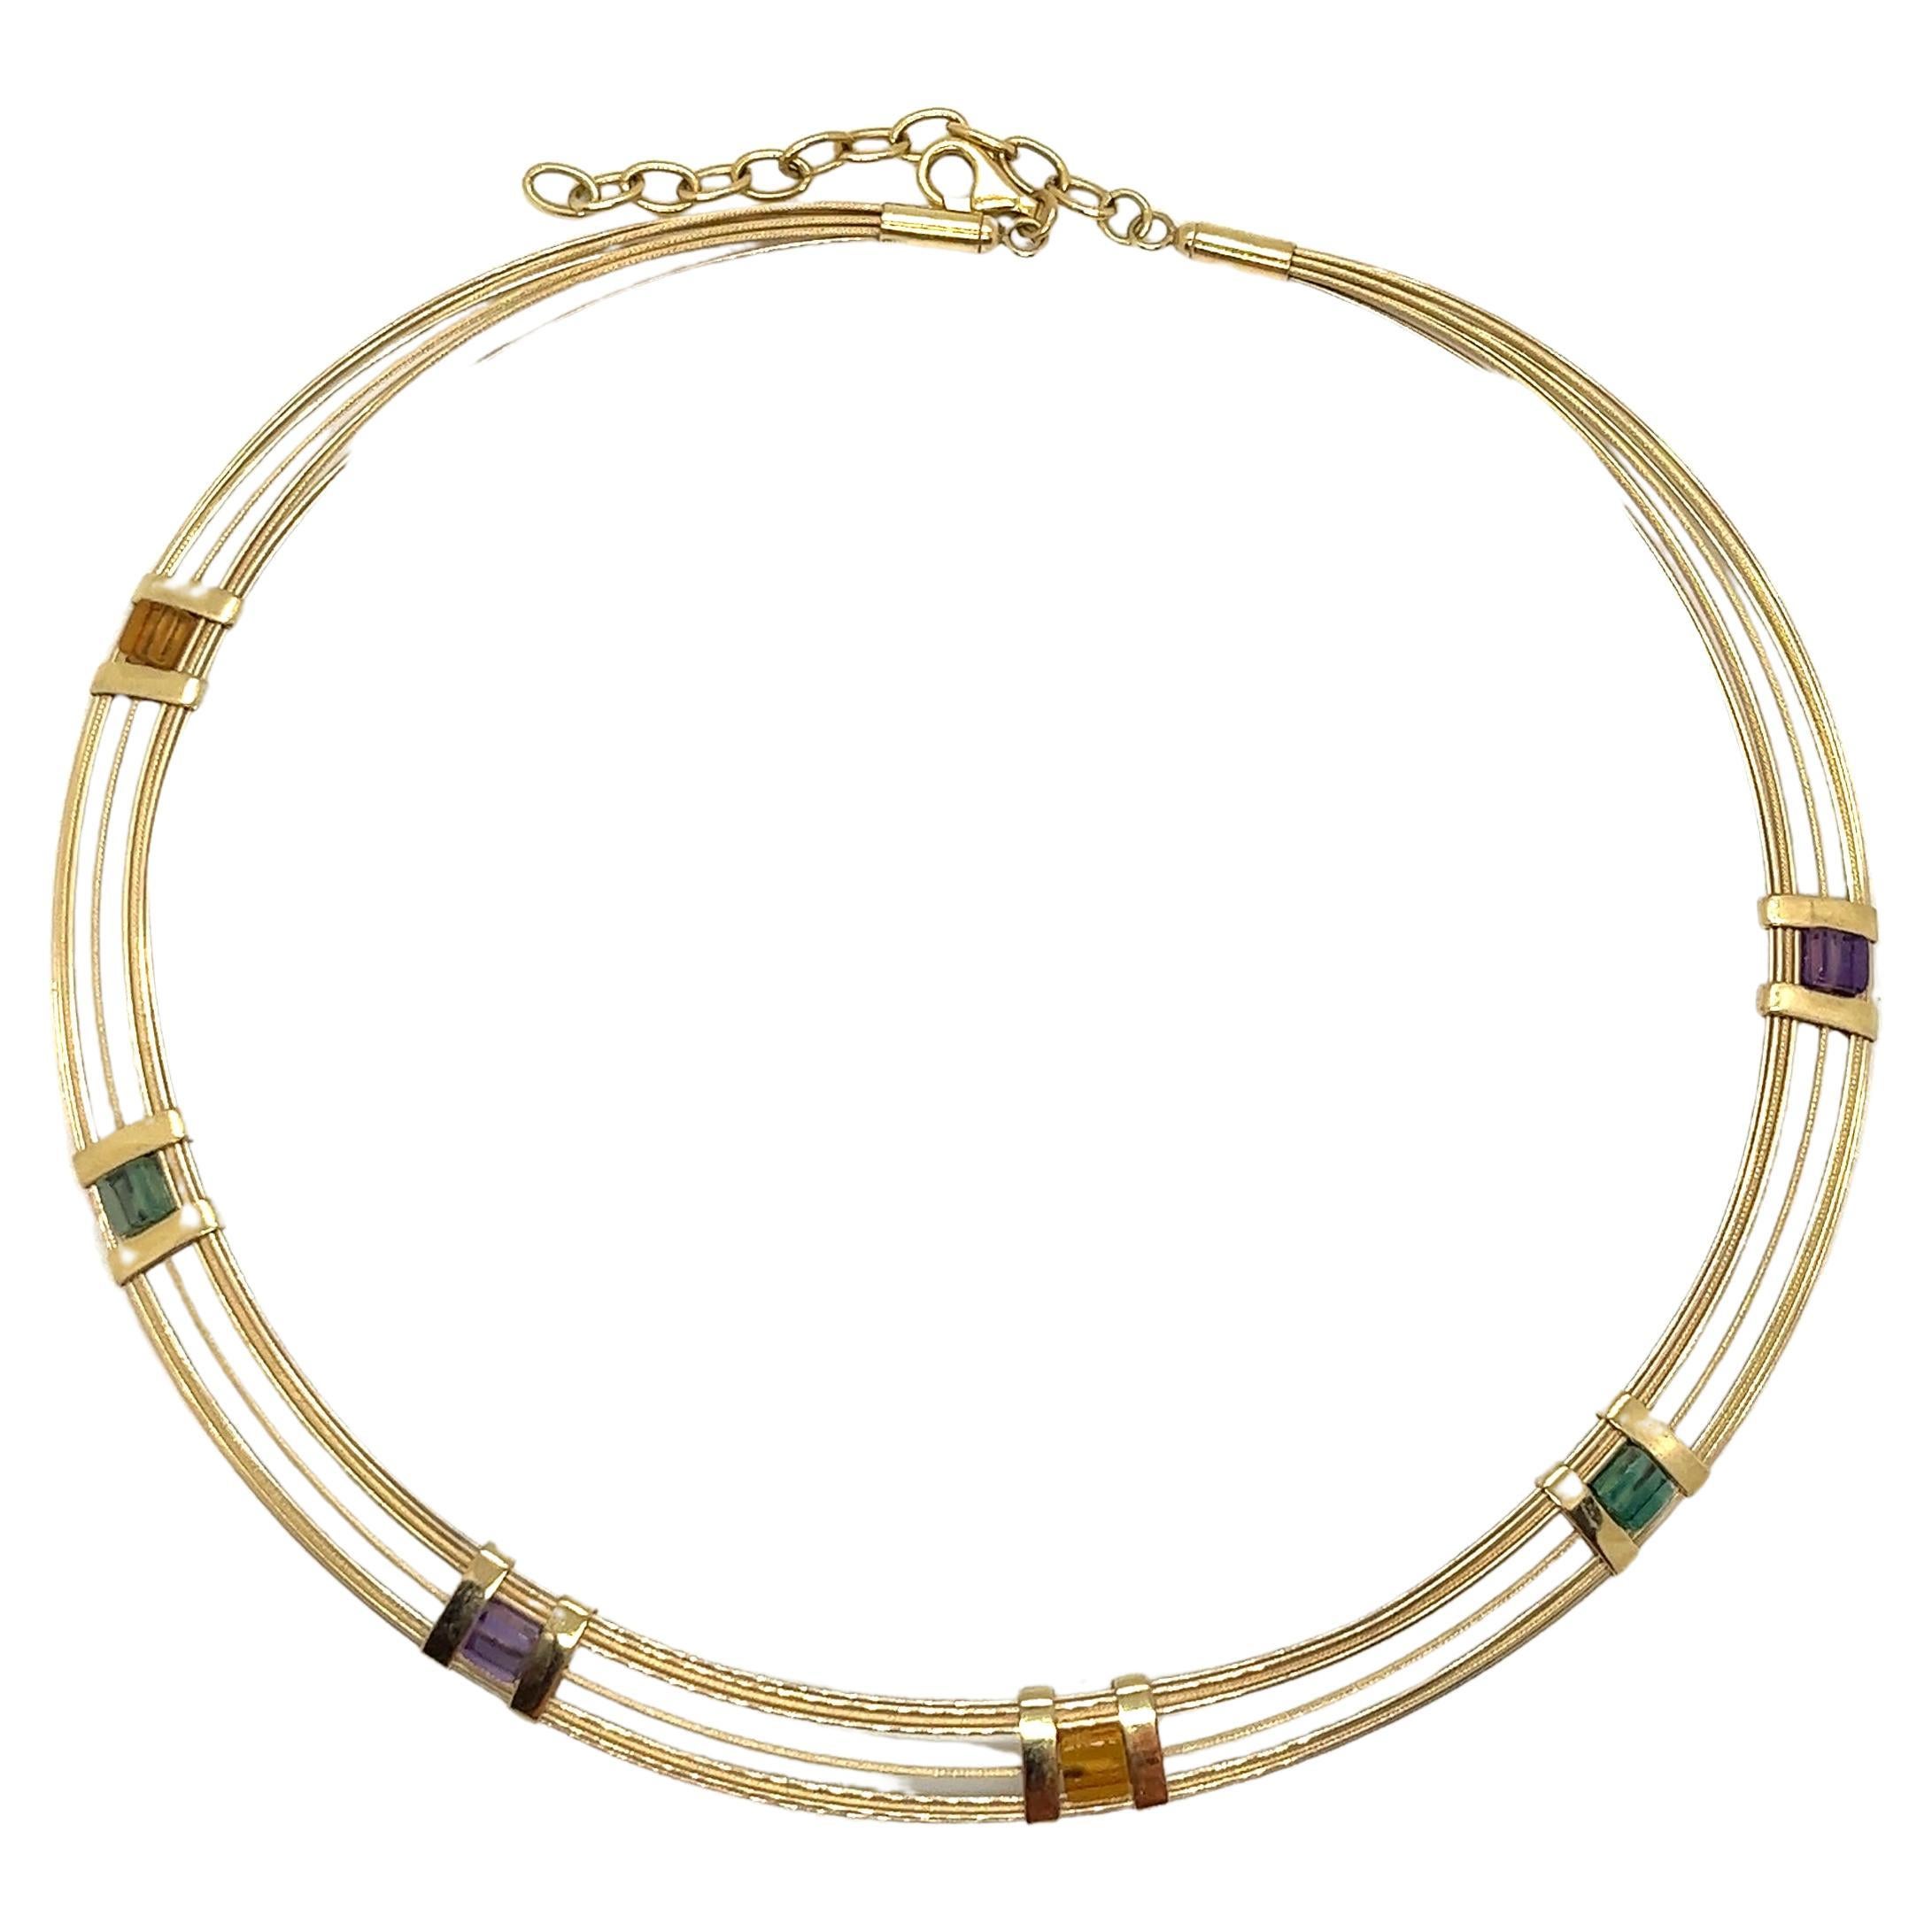 Vintage 14KY Gold Collar Necklace with Semi-Precious Gemstones